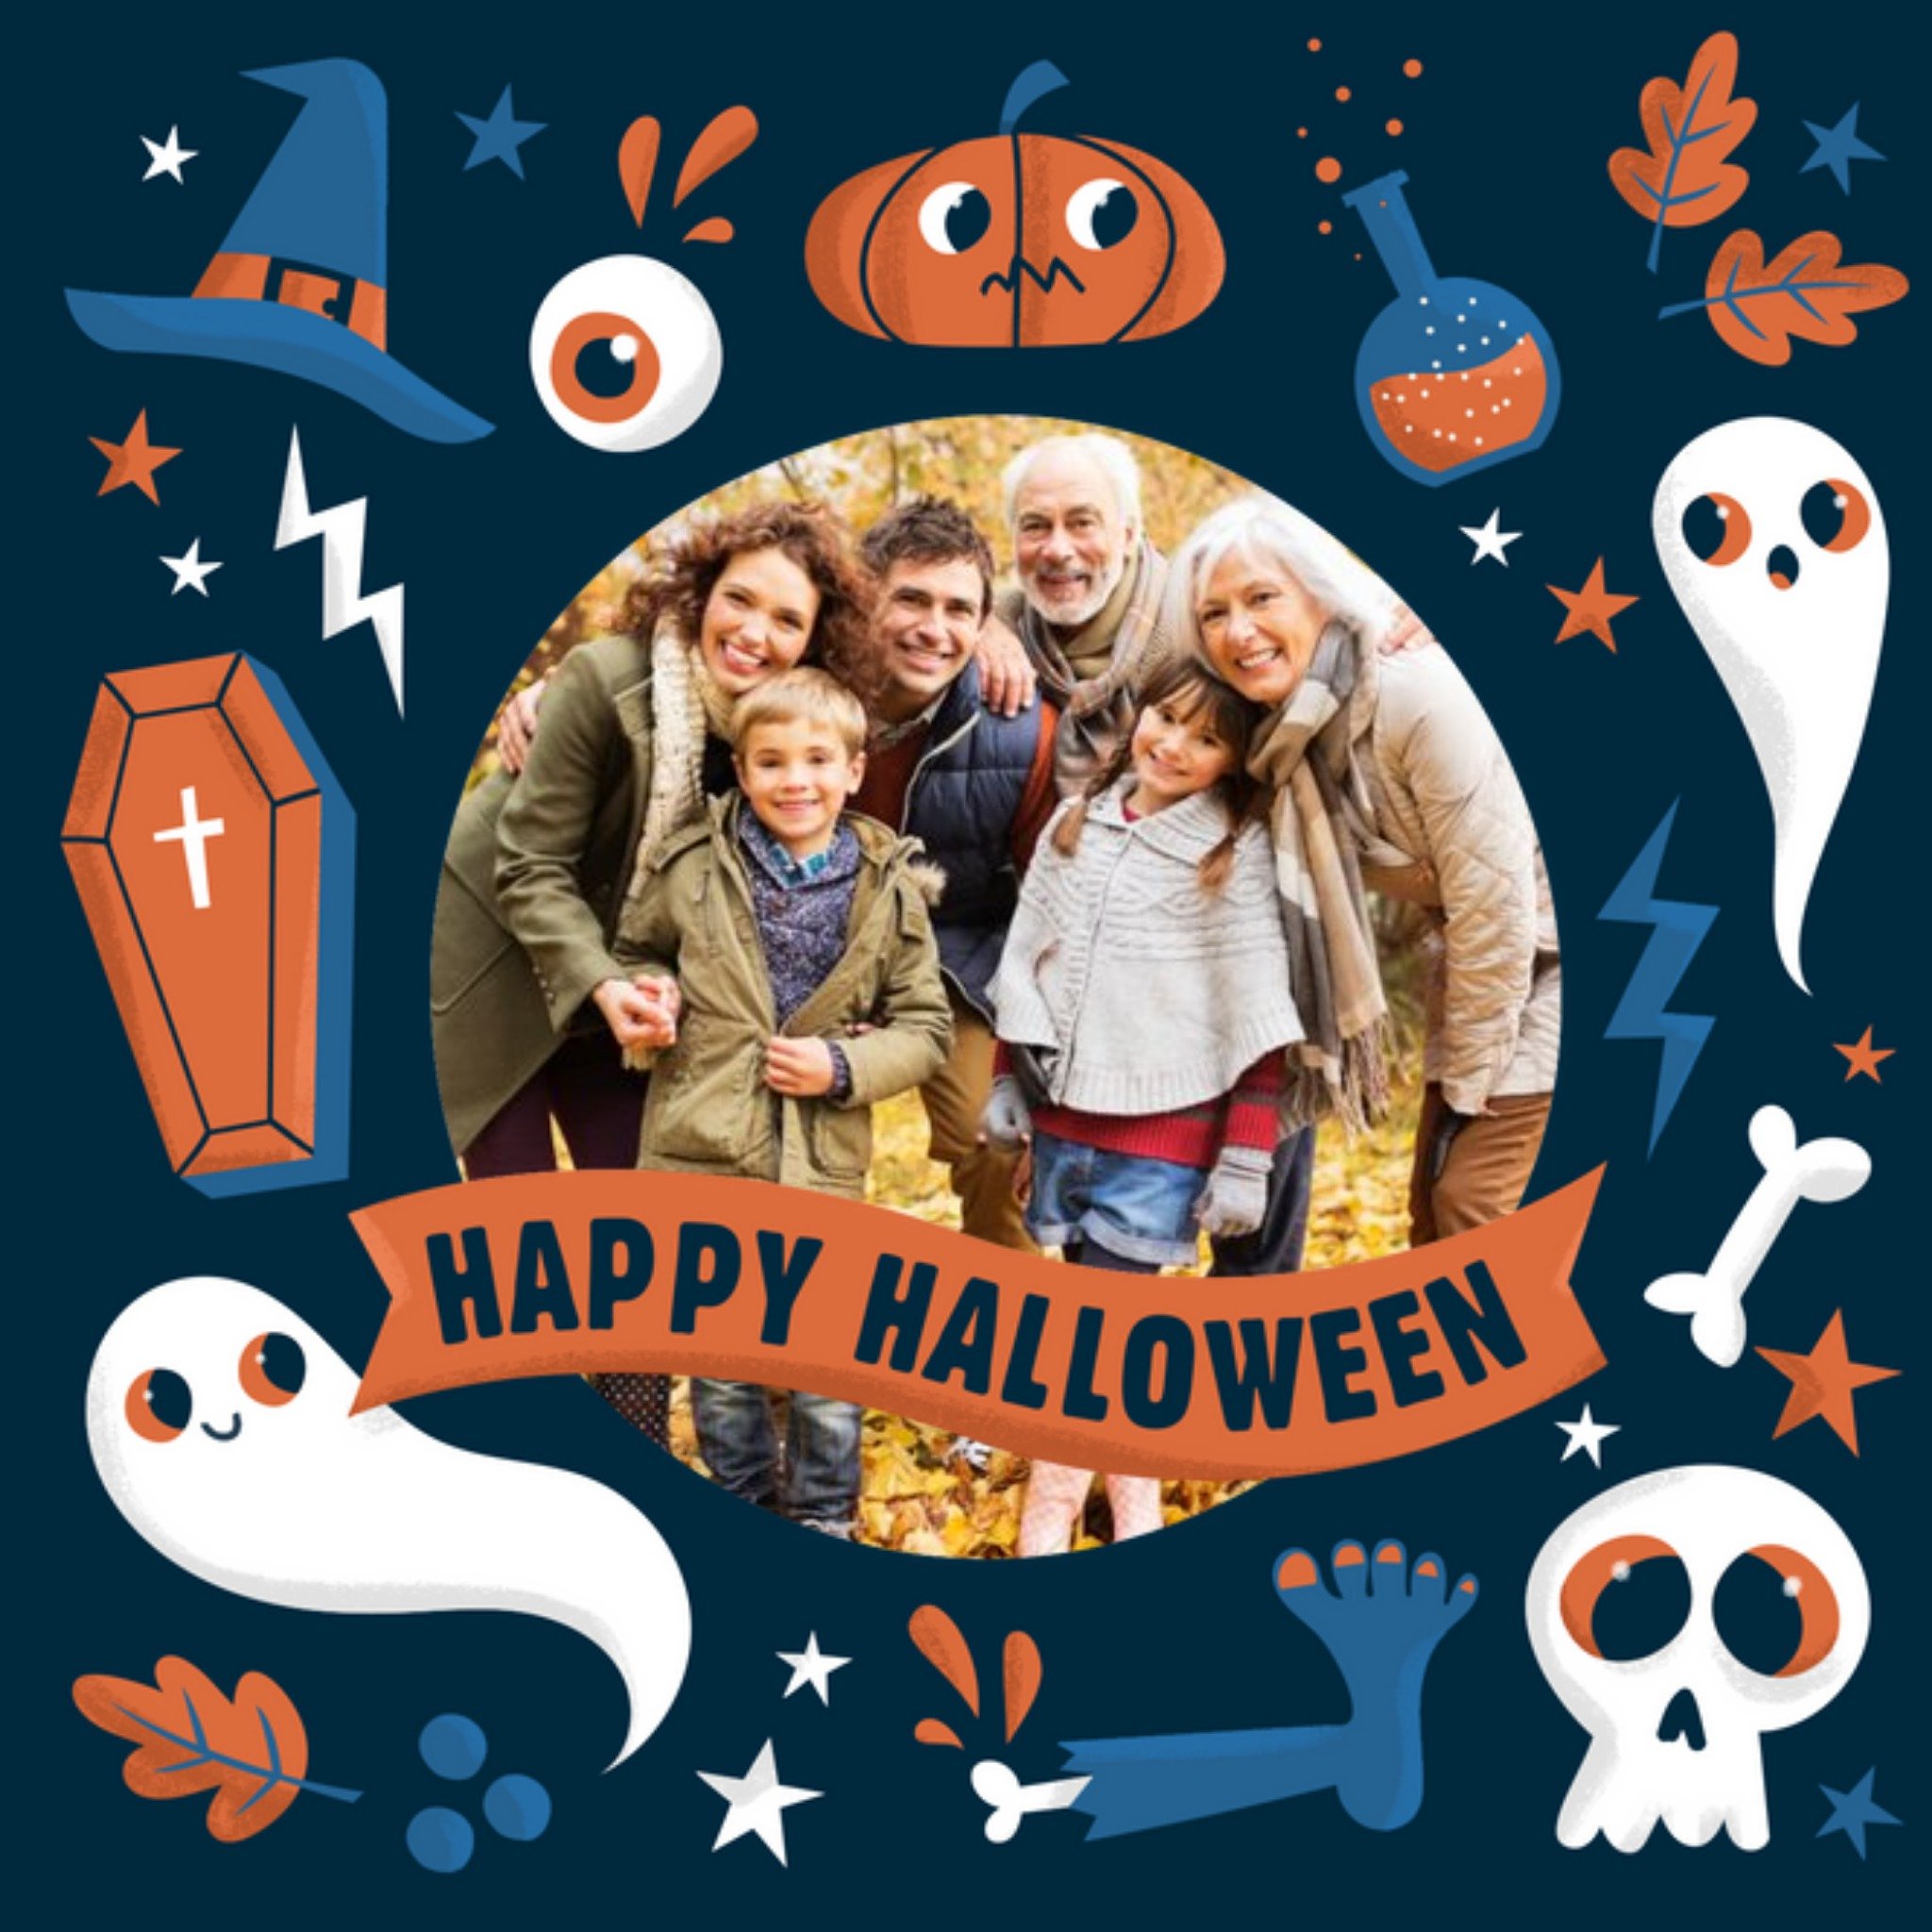 Moonpig Bright Fun Halloween Illustrations Happy Halloween Photo Upload Card, Large